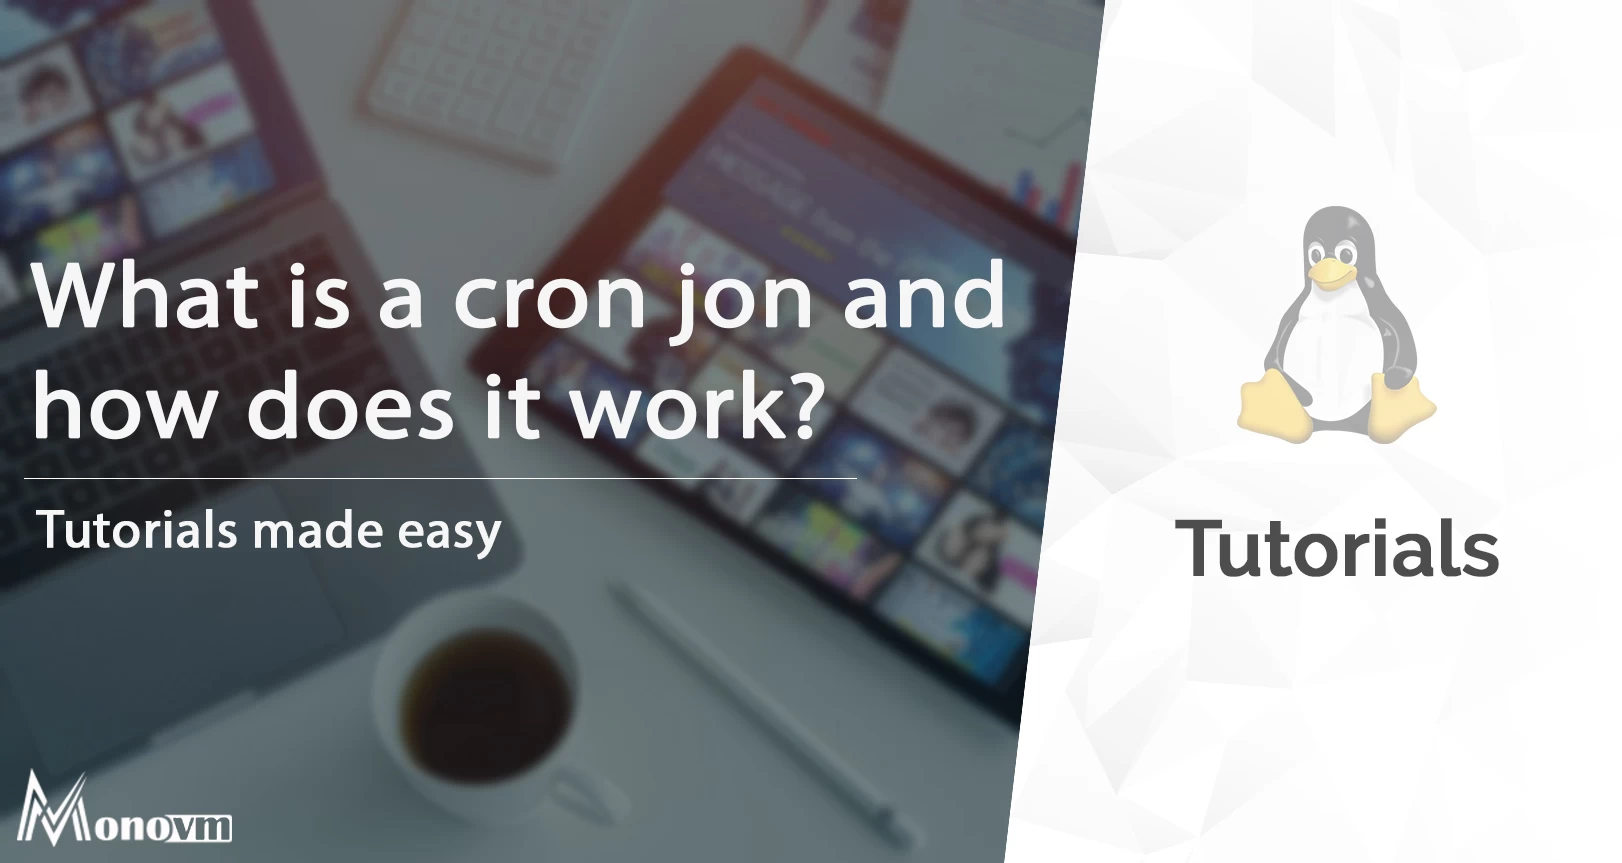 What is cron job?